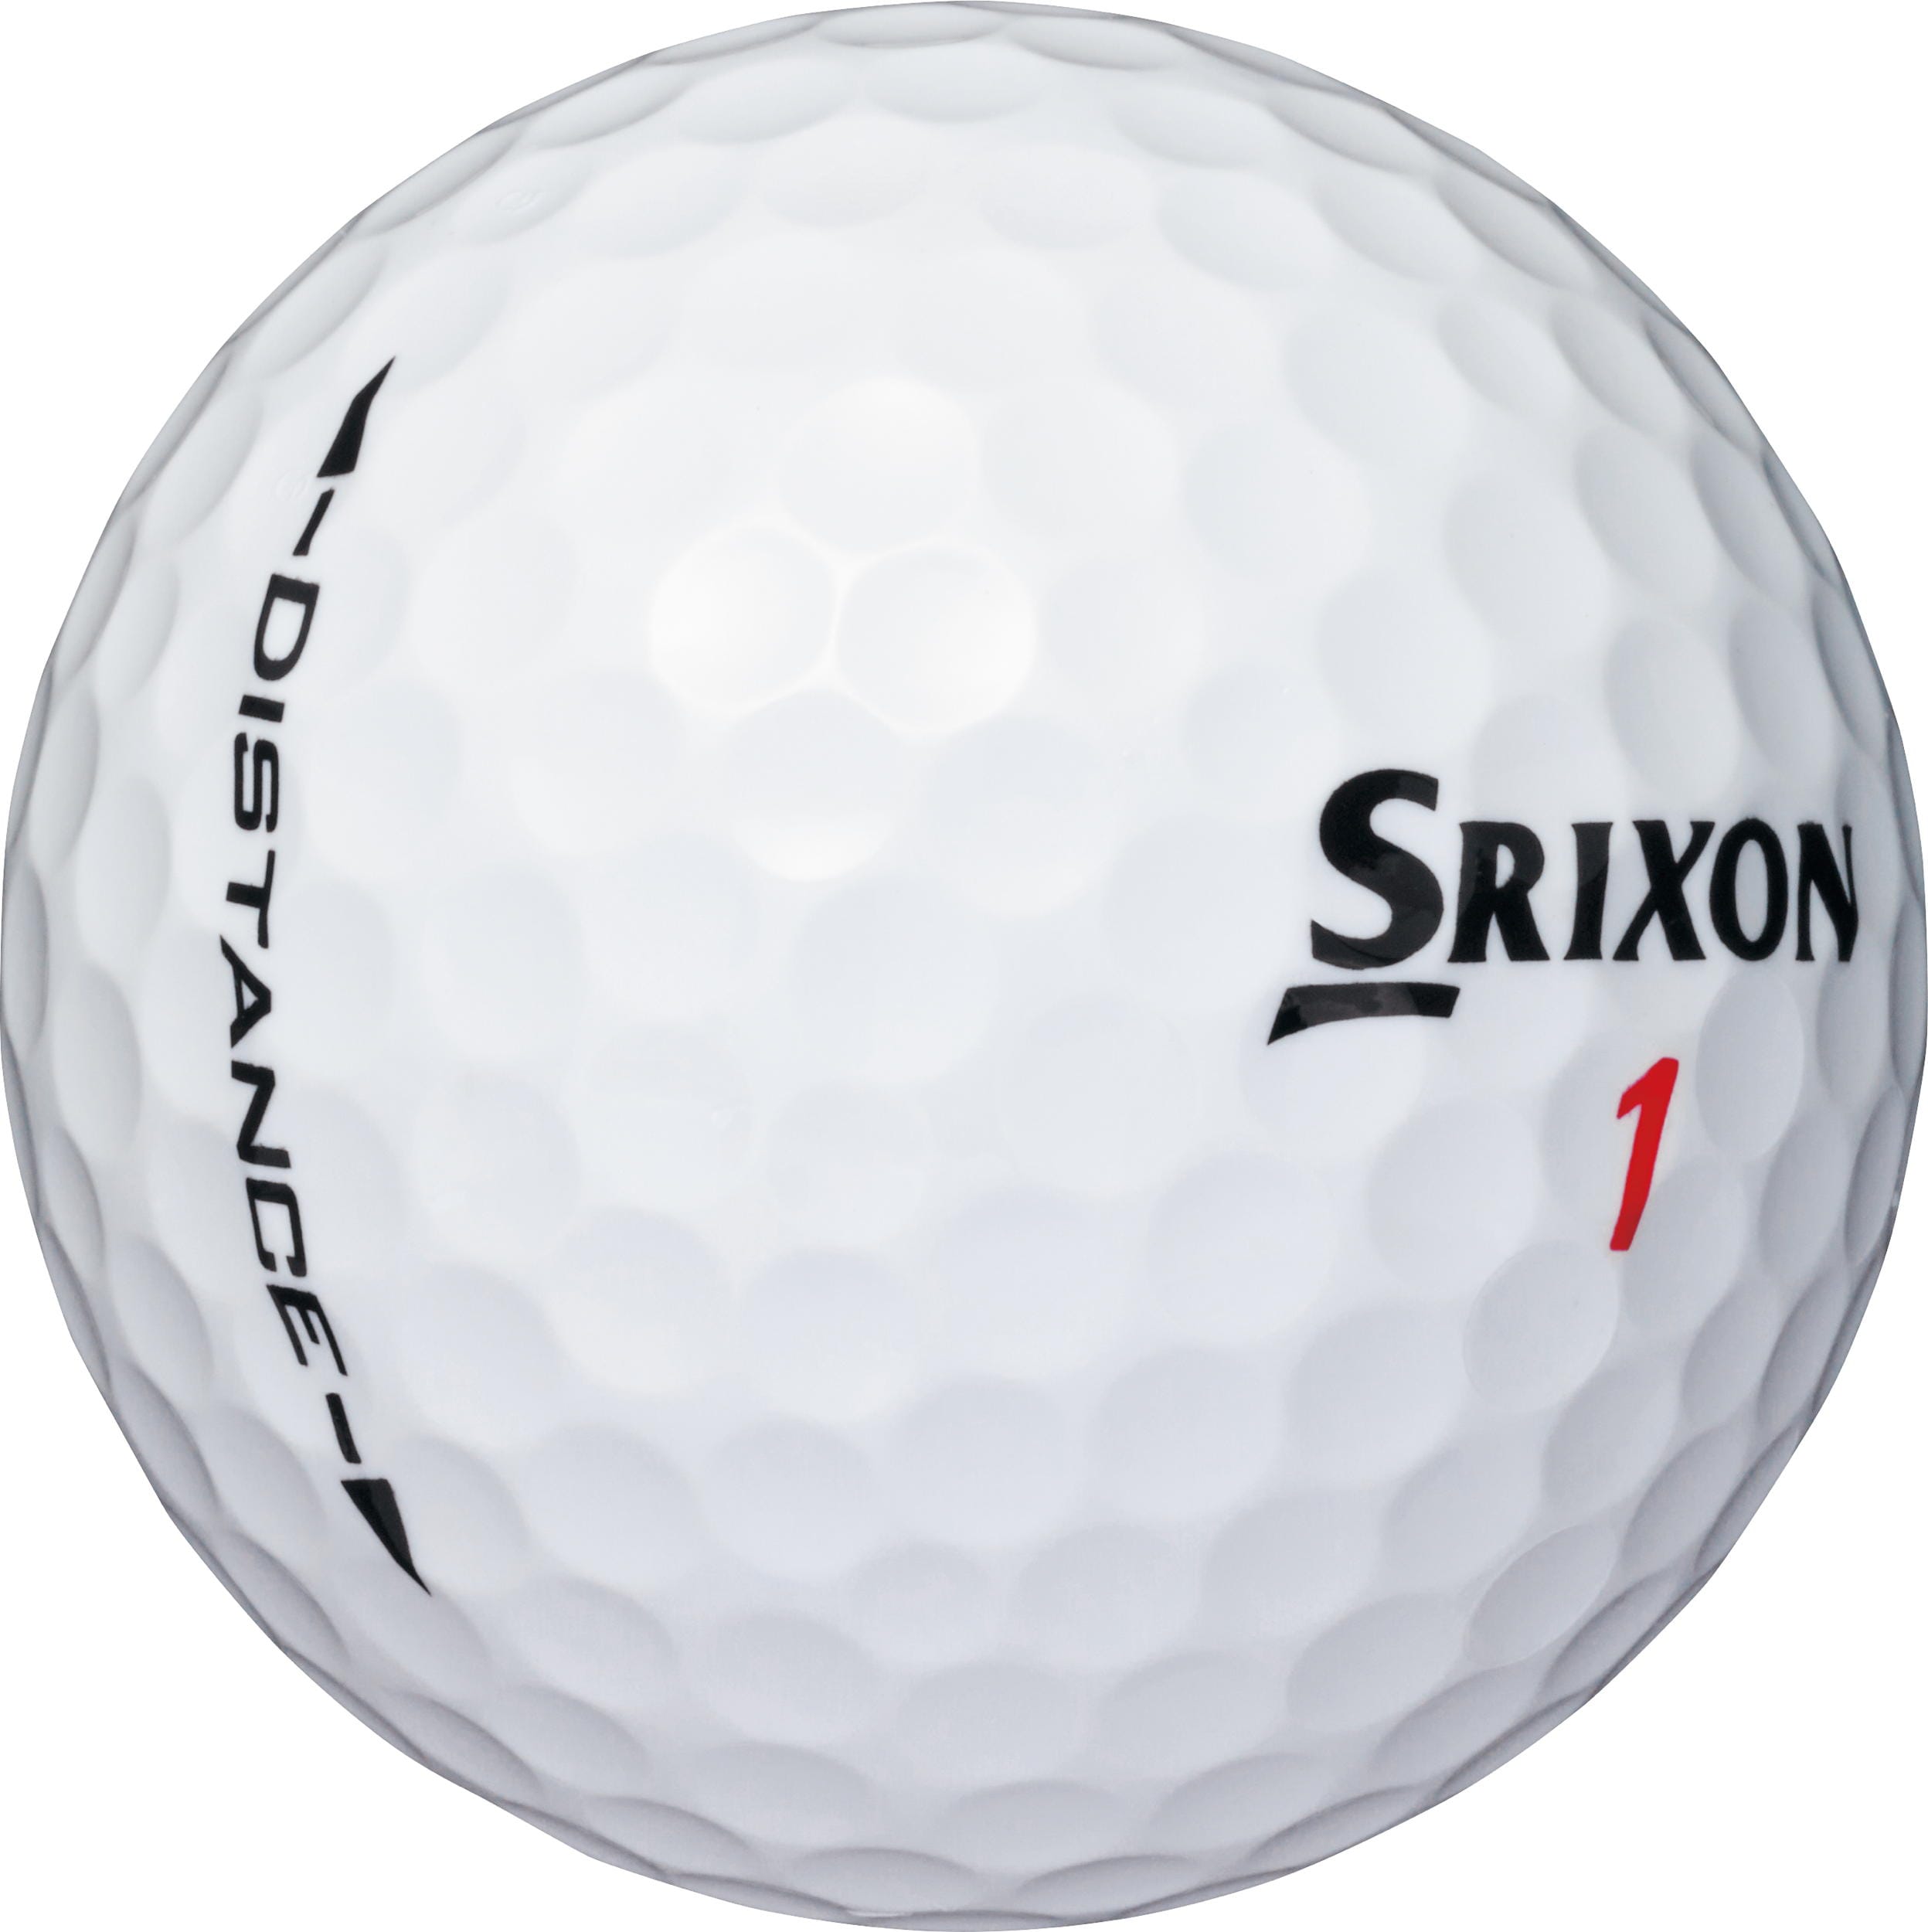 Srixon Distance Golfbälle, white